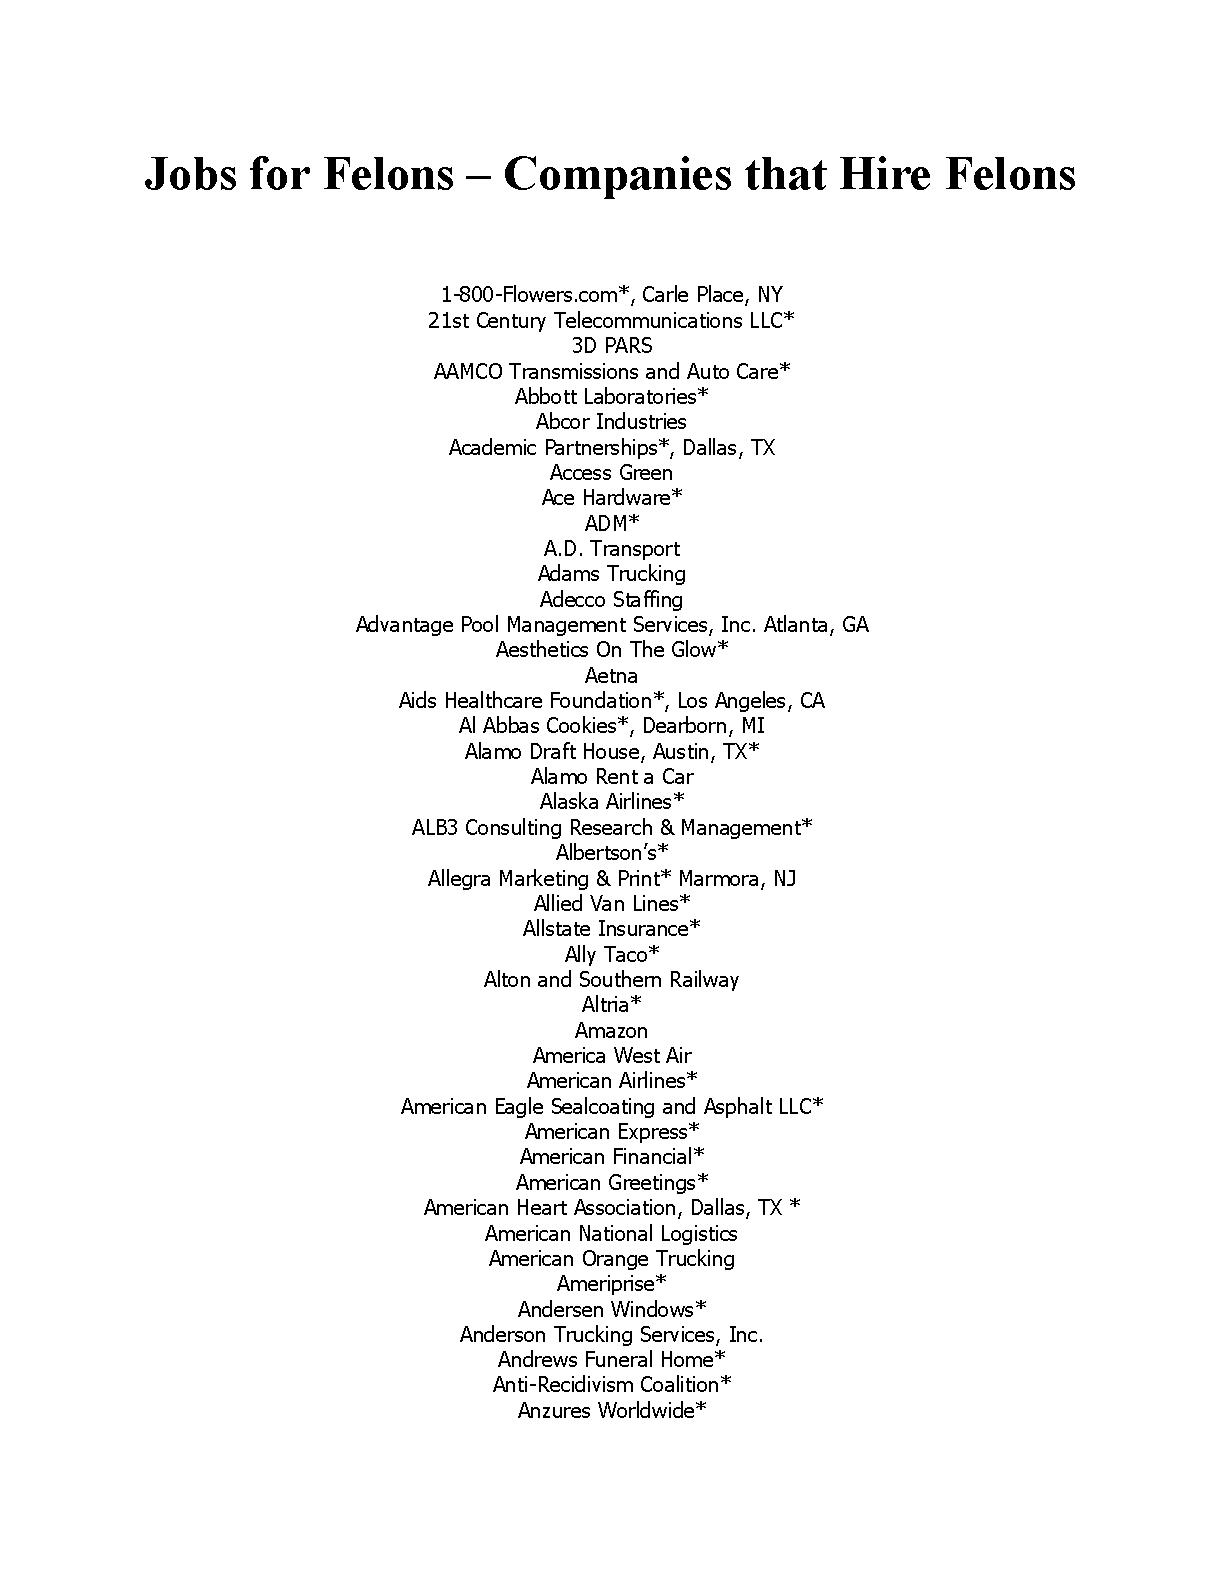 Jobs for Felons Companies that Hire Felons PDF Host